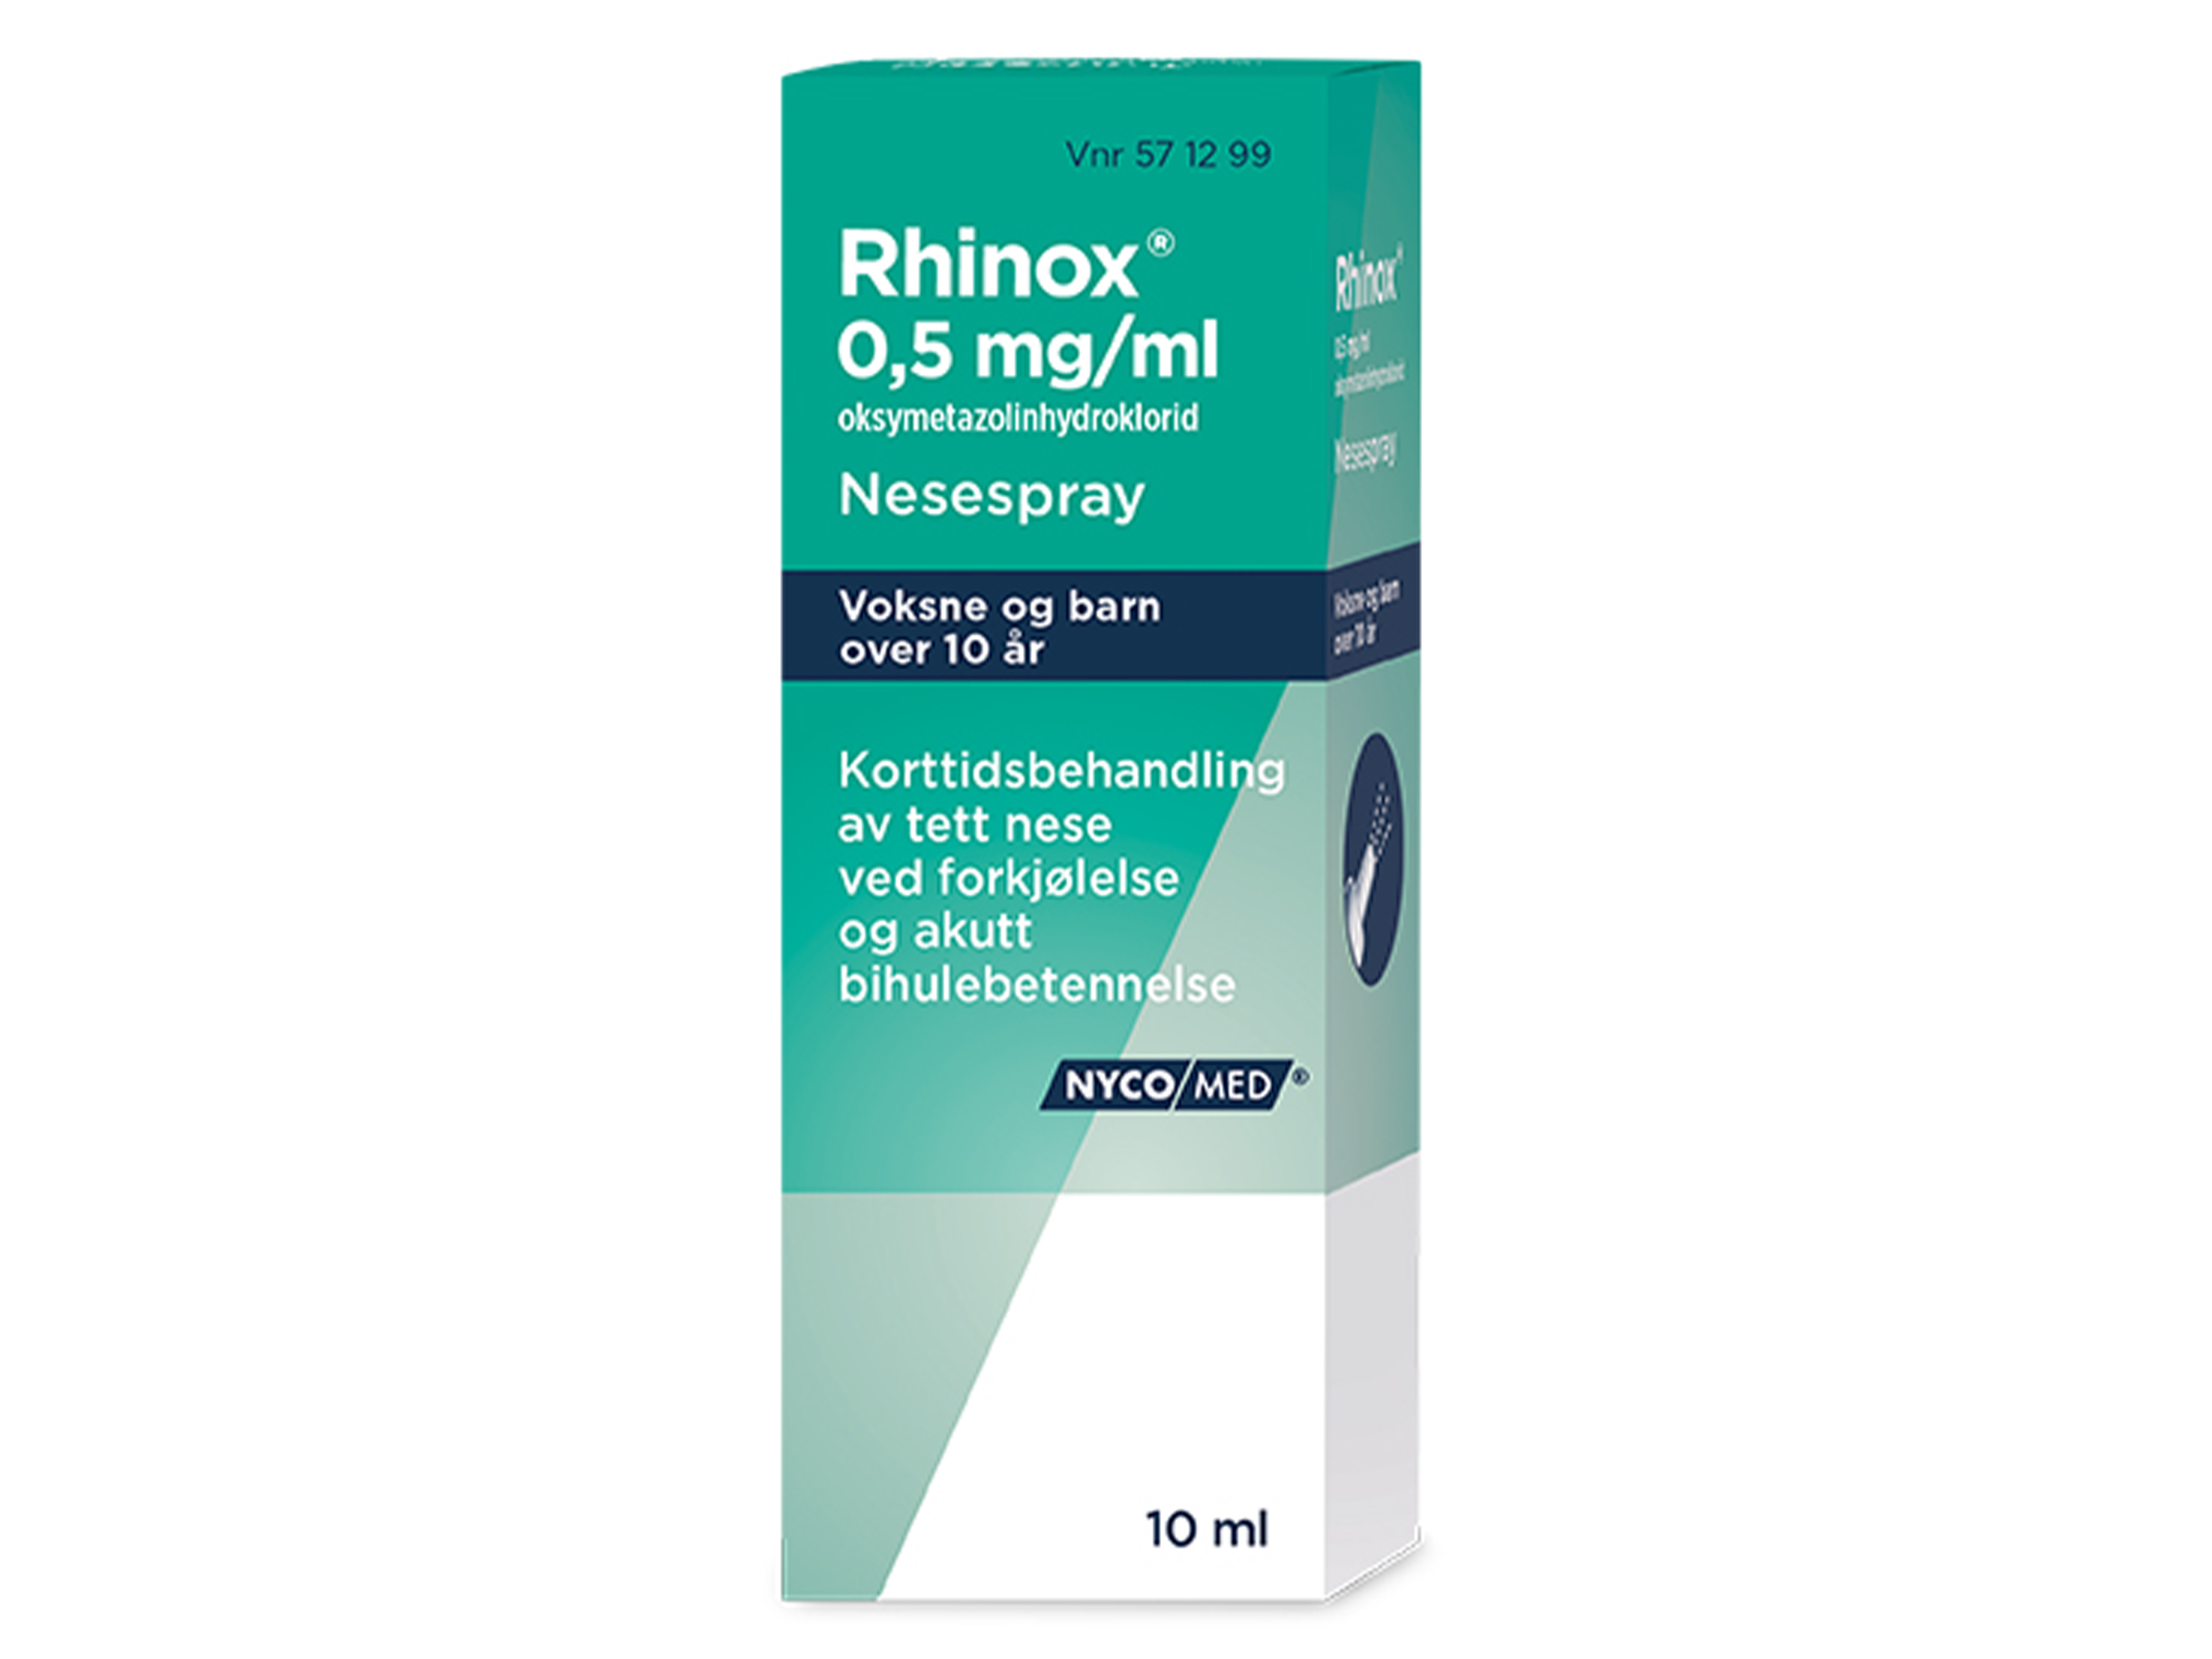 Rhinox Nesespray 0,5mg/ml, 0,5 mg/ml til voksen, 10 ml